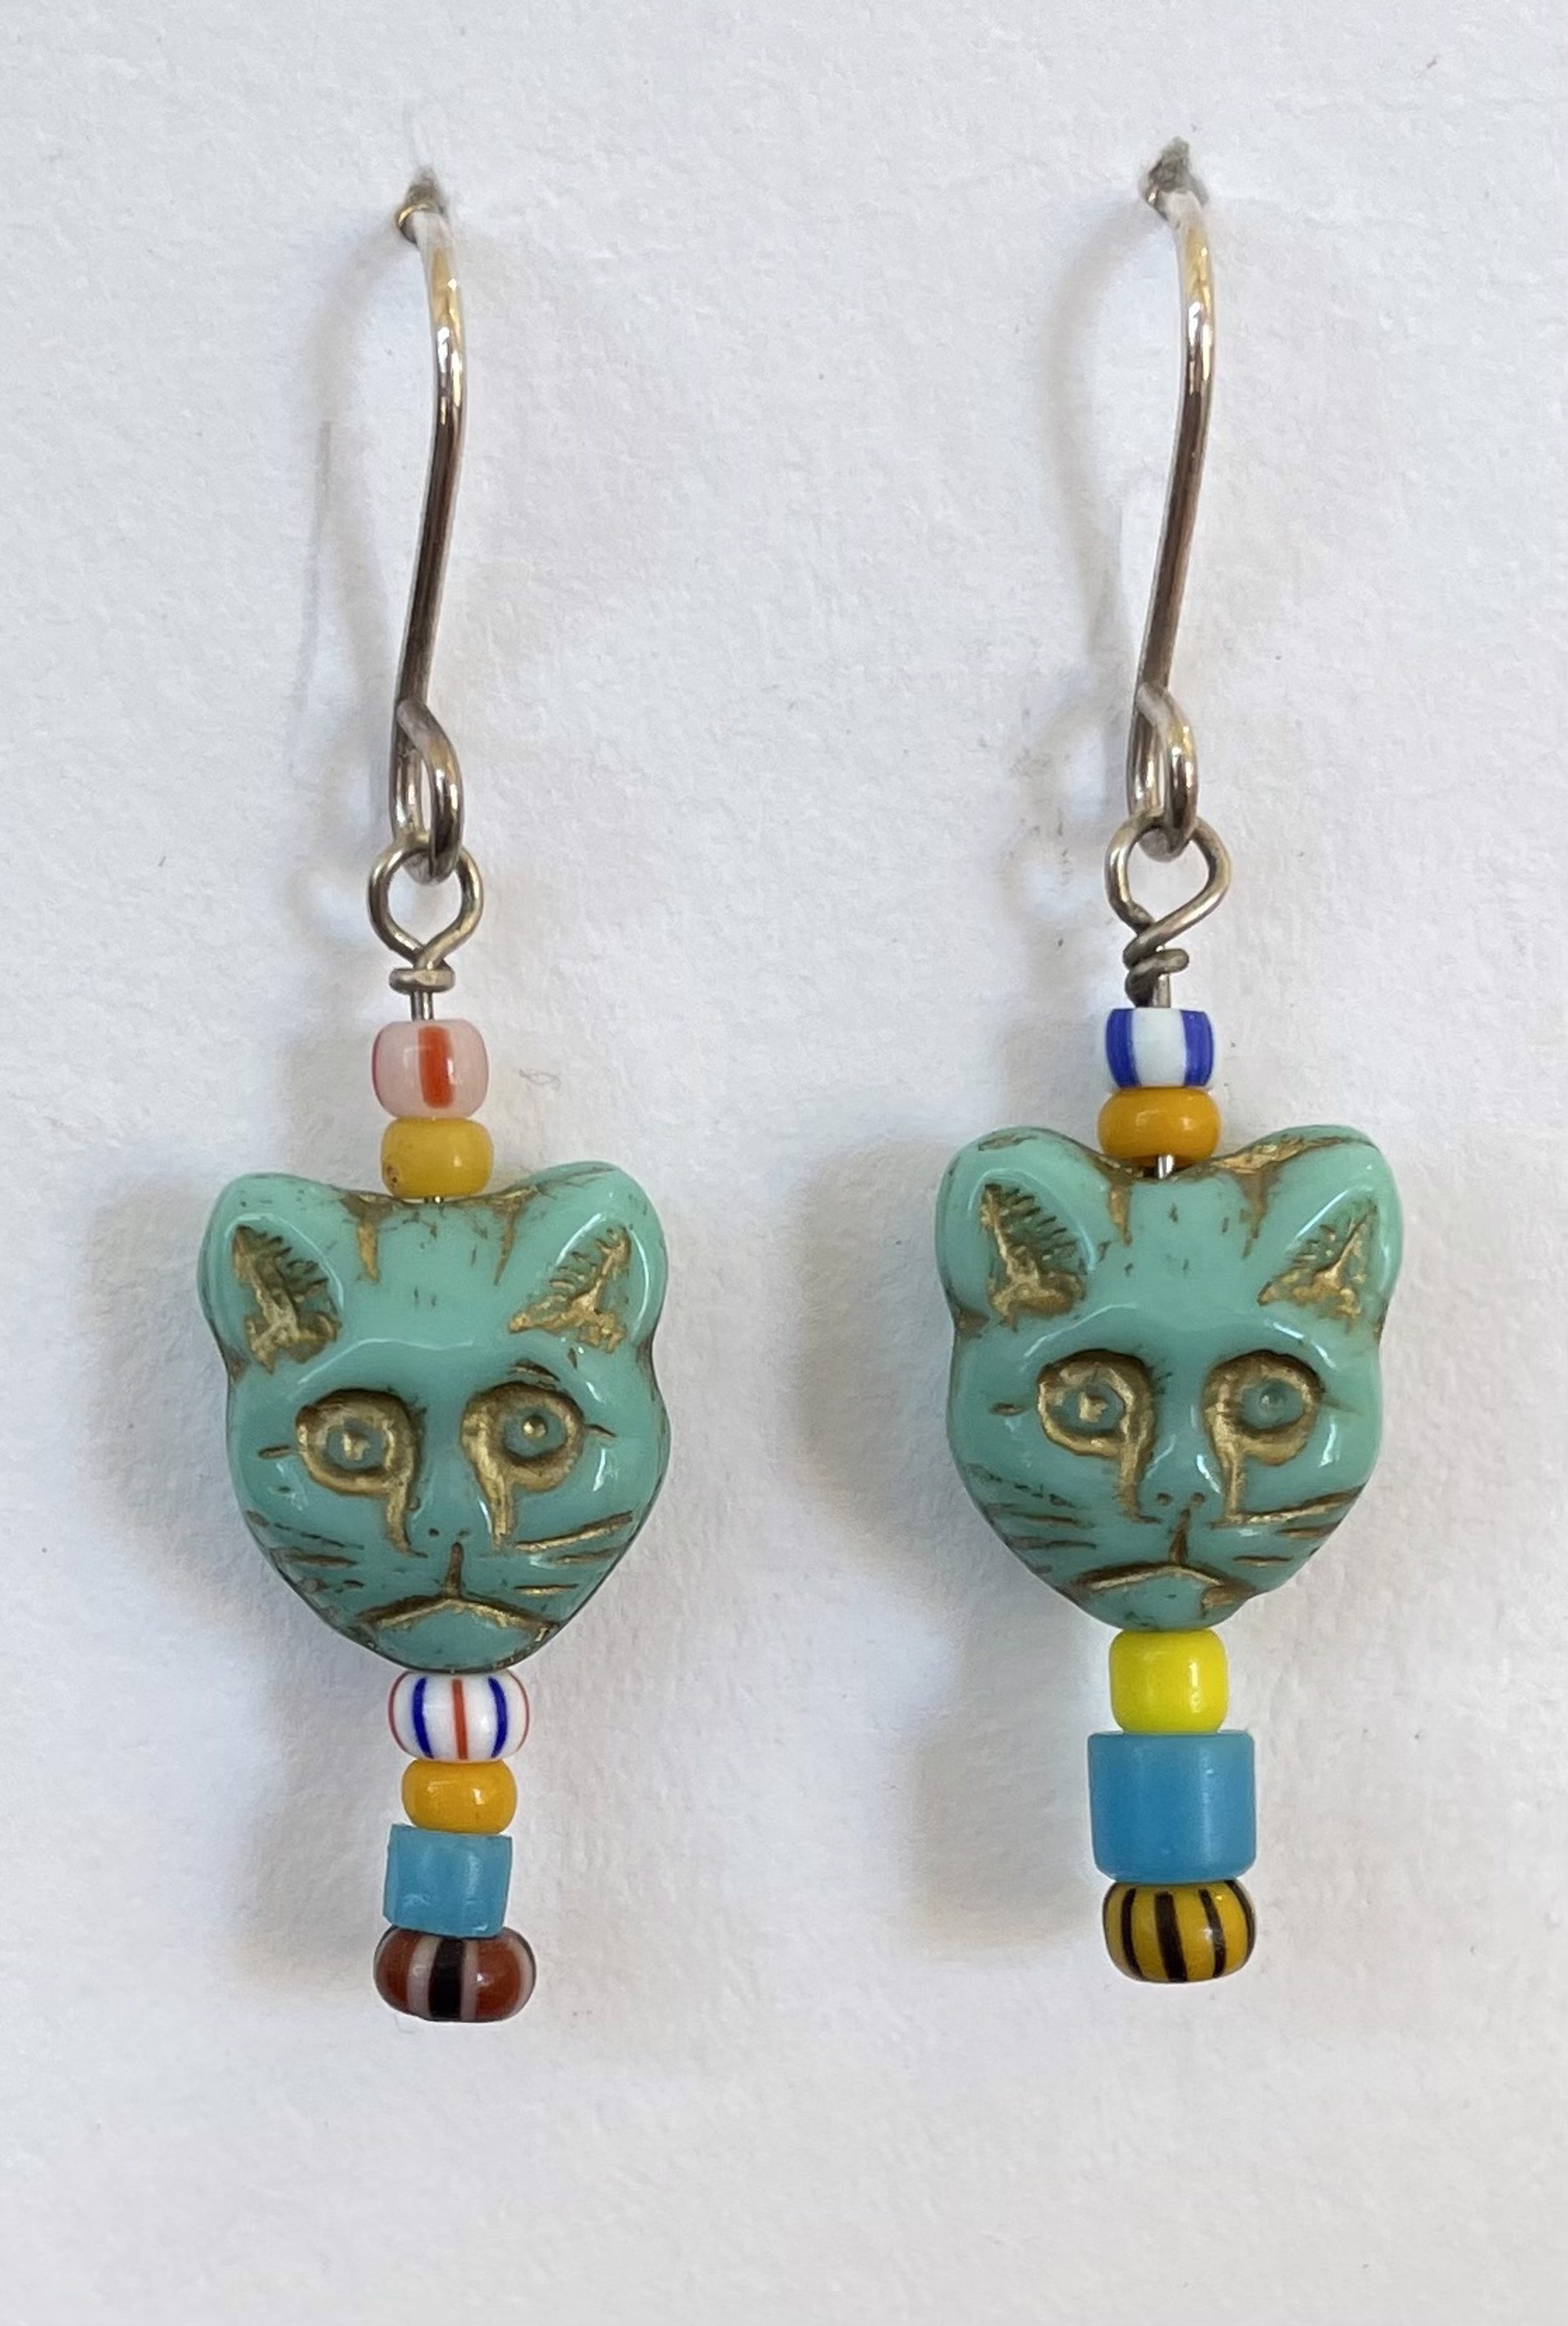 Cat Earrings by Emelie Hebert